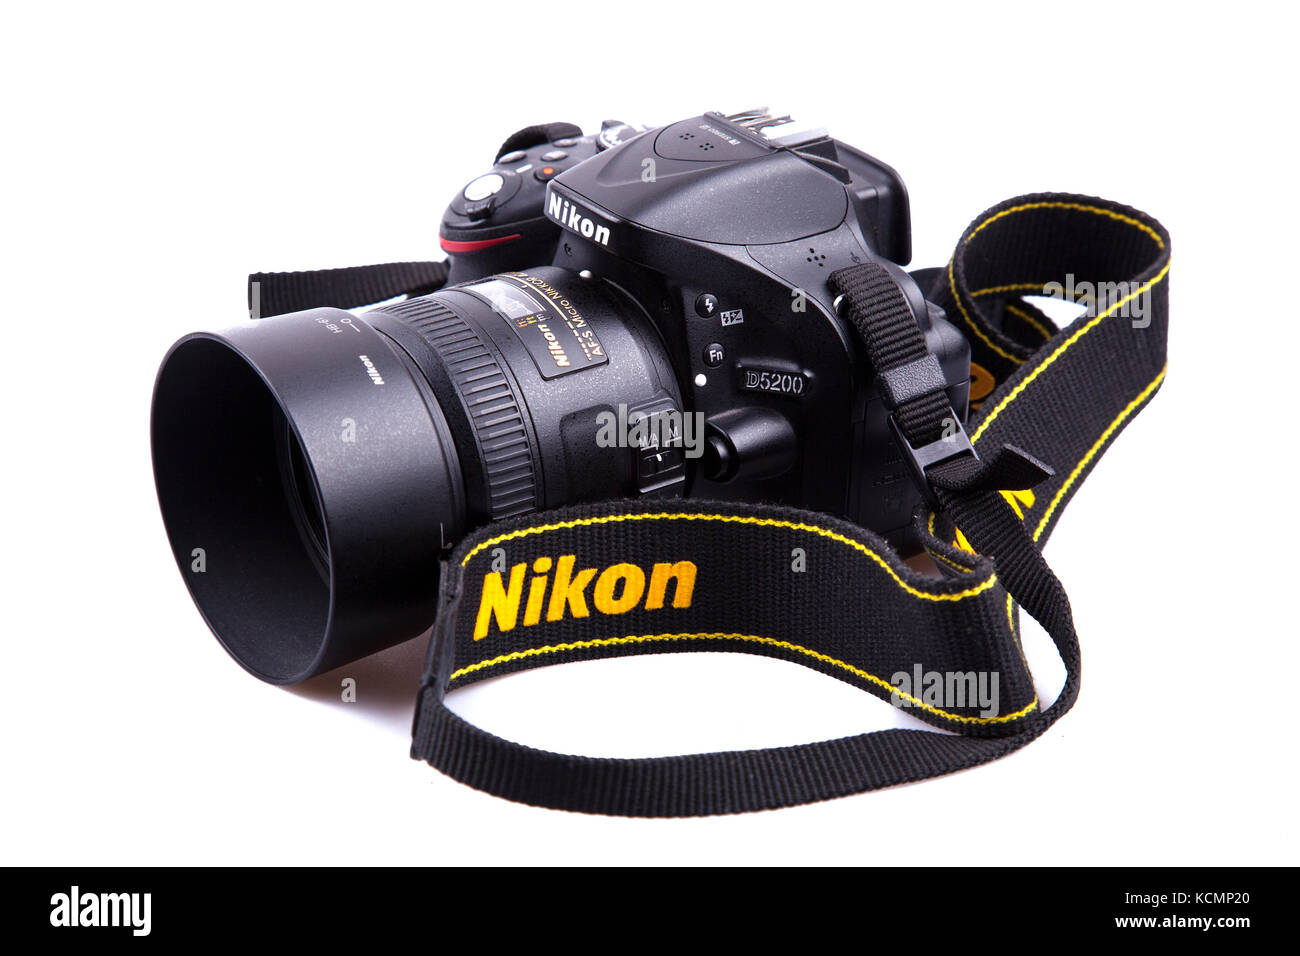 Nikon D5200 Cámara con lente de 40 mm Fotografía de stock - Alamy